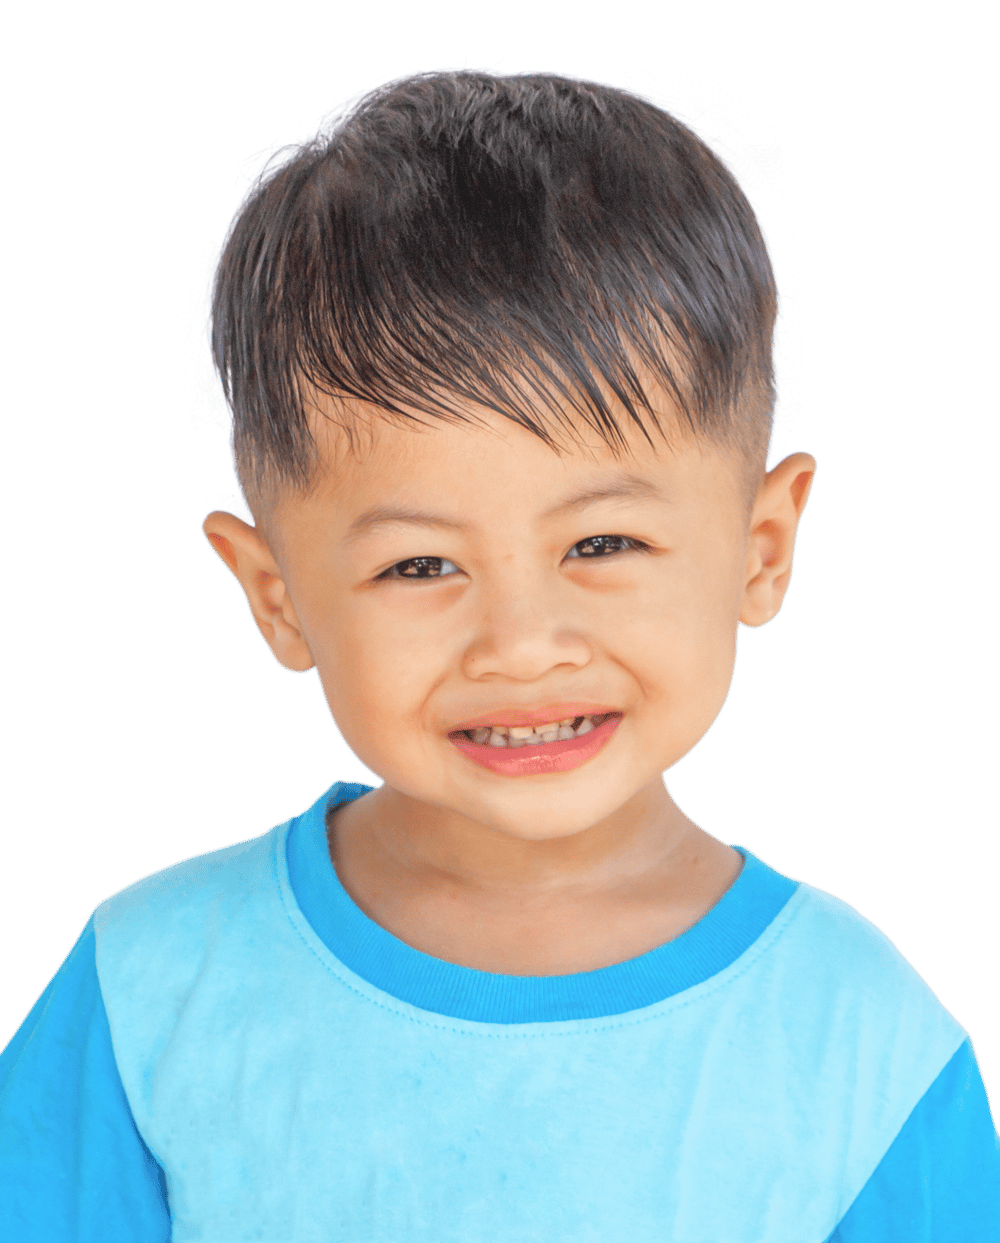 Toddler age child of parenting program participant smiling